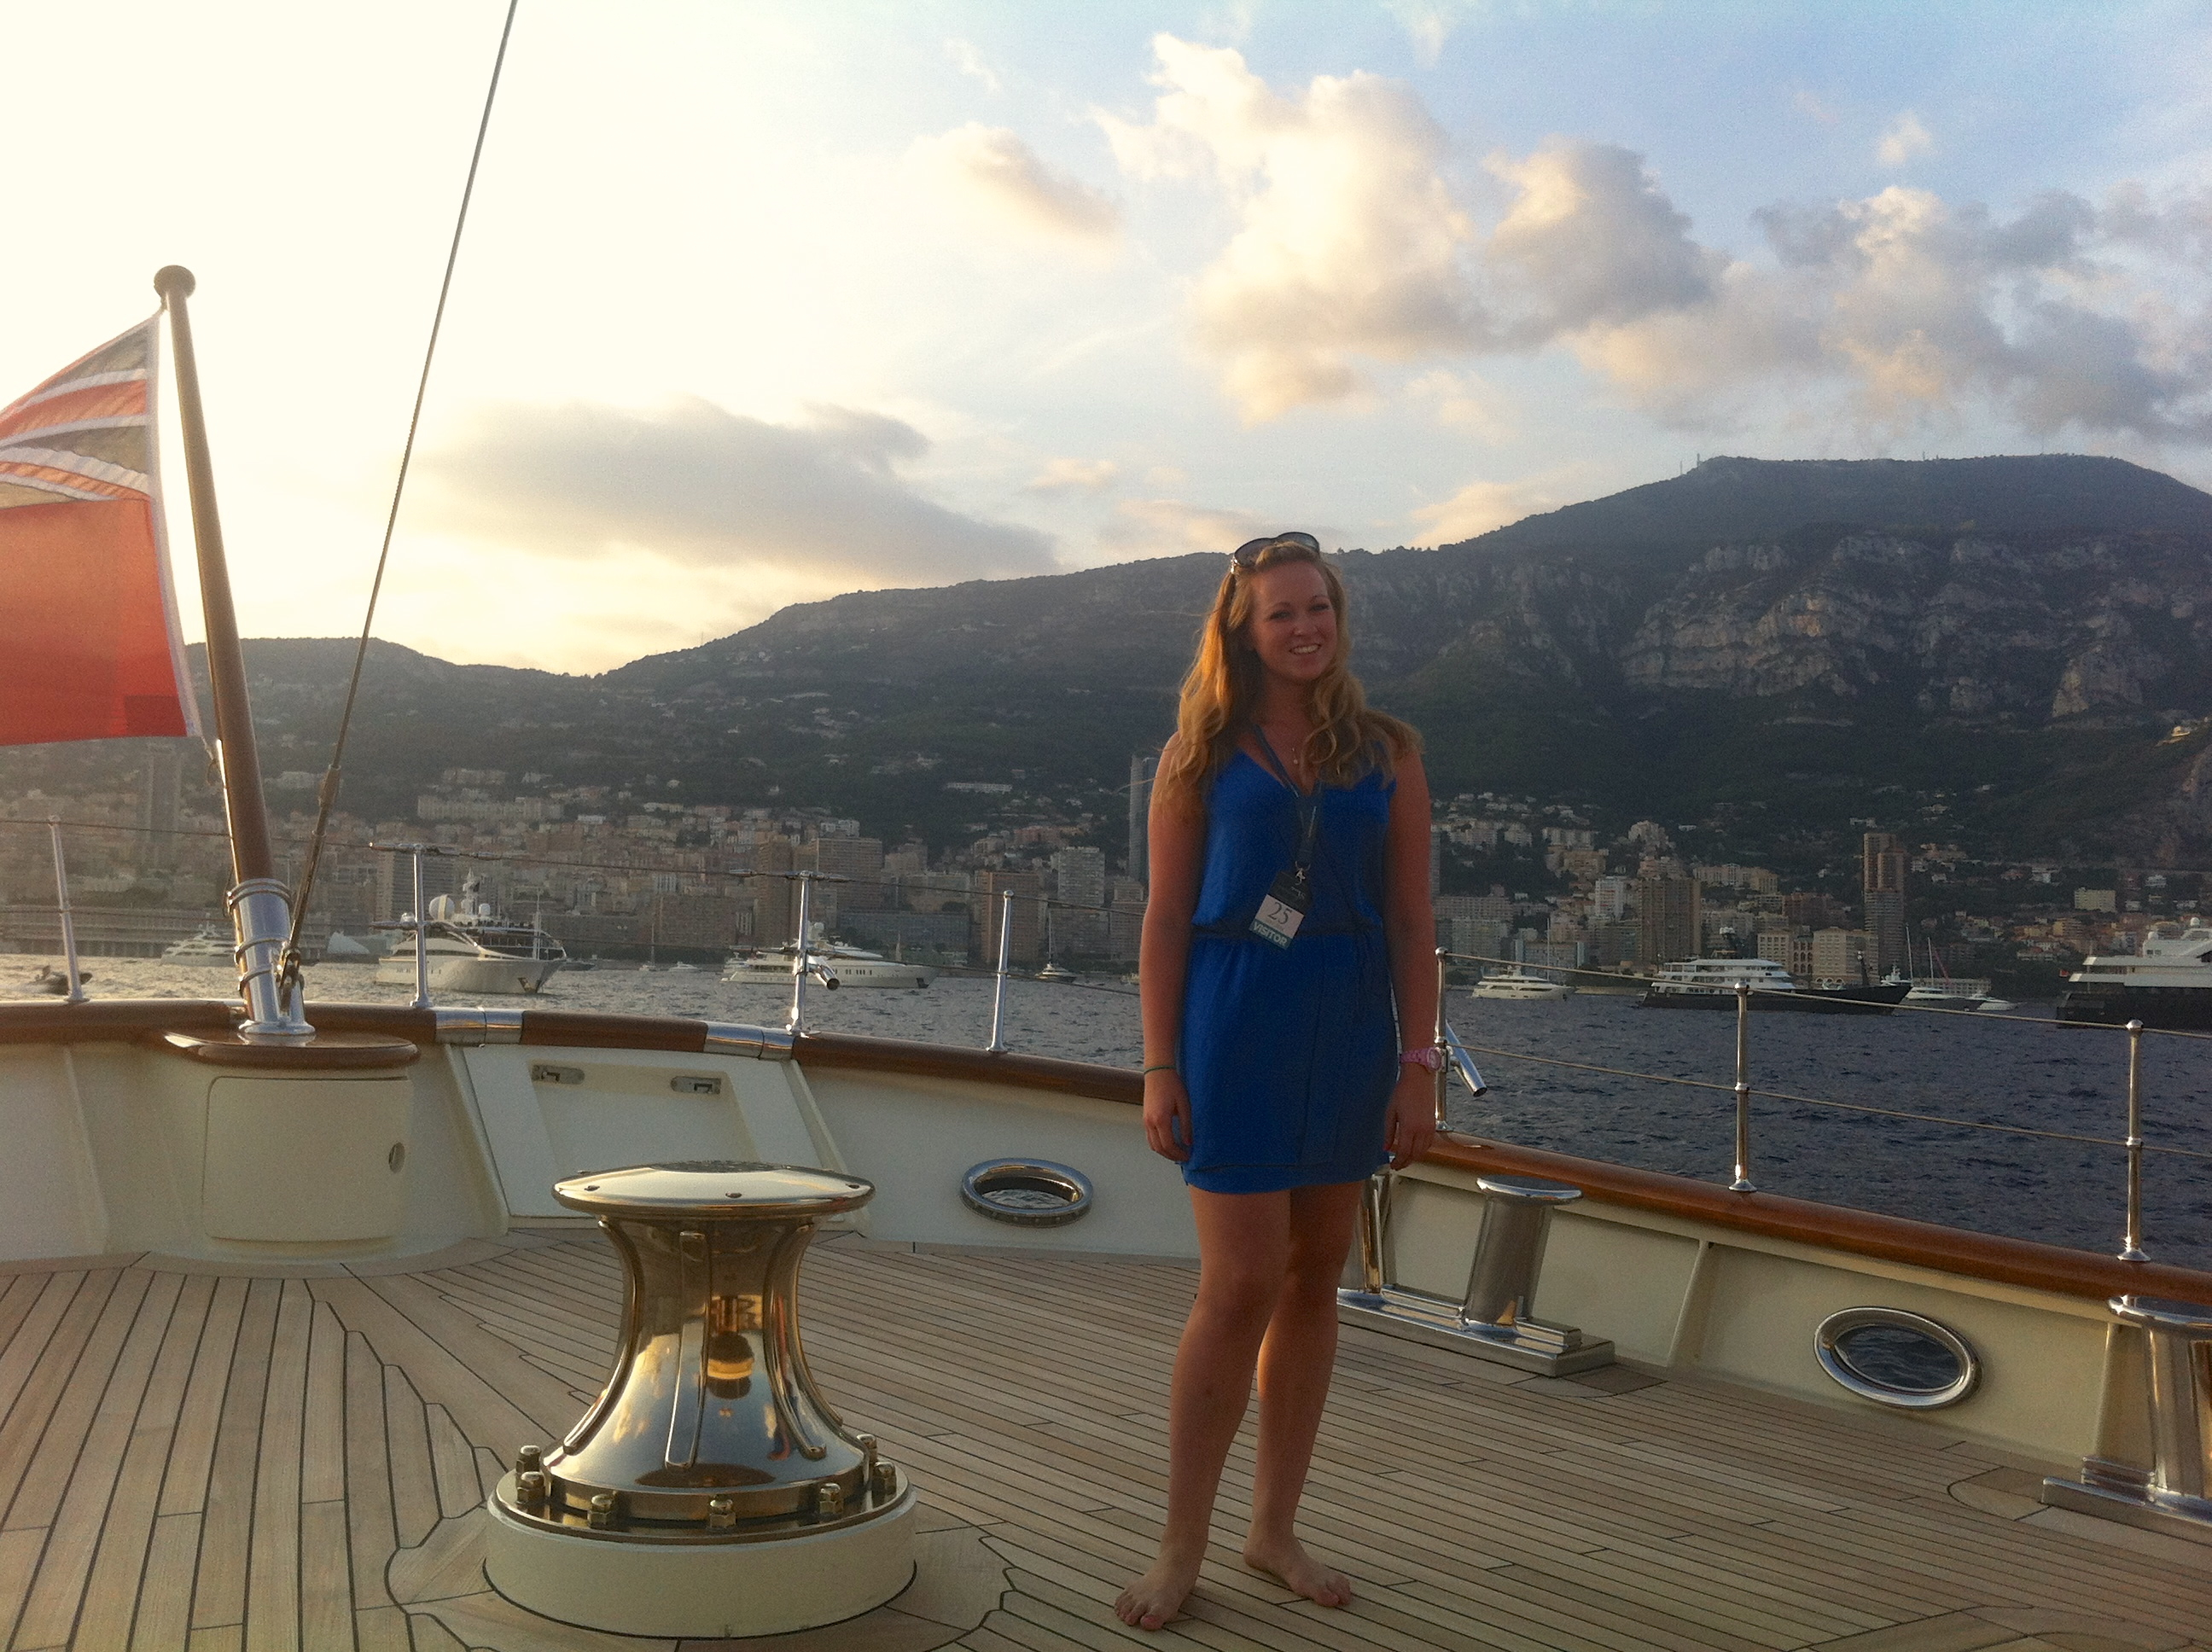 Enjoying the sunset on a yacht in Monaco